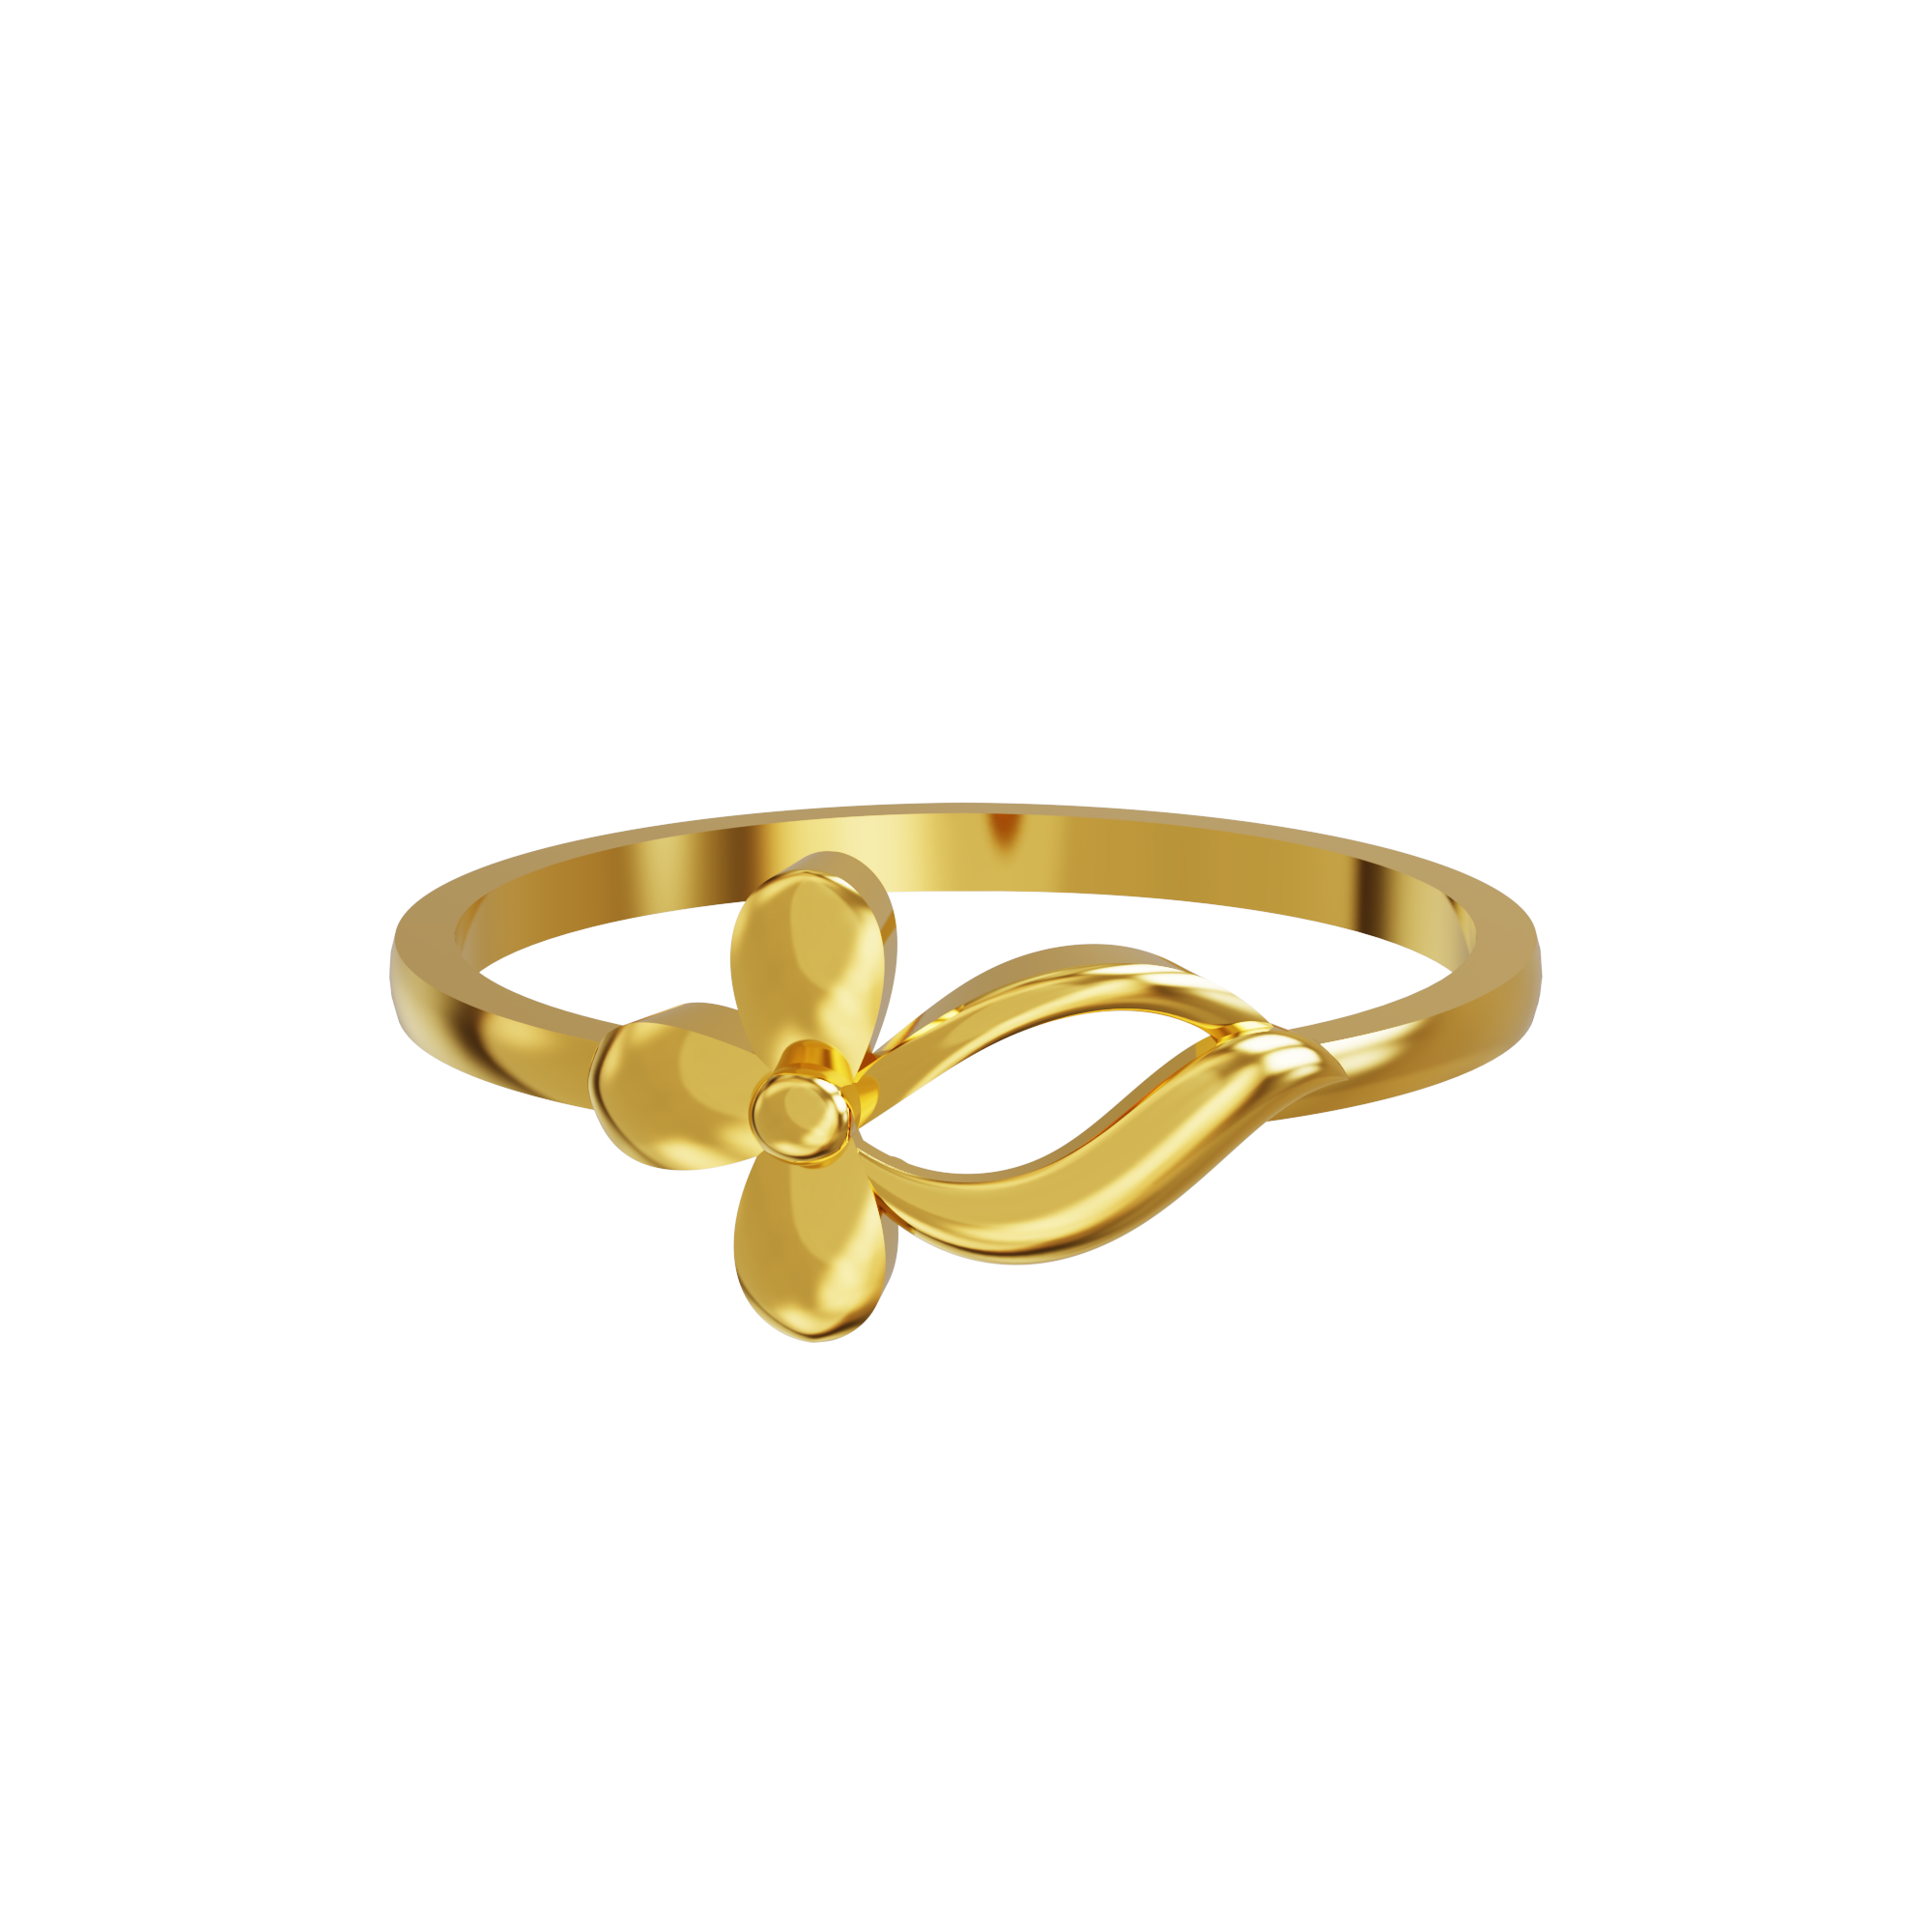 Rings - Hermès Gold Jewelry | Hermès USA